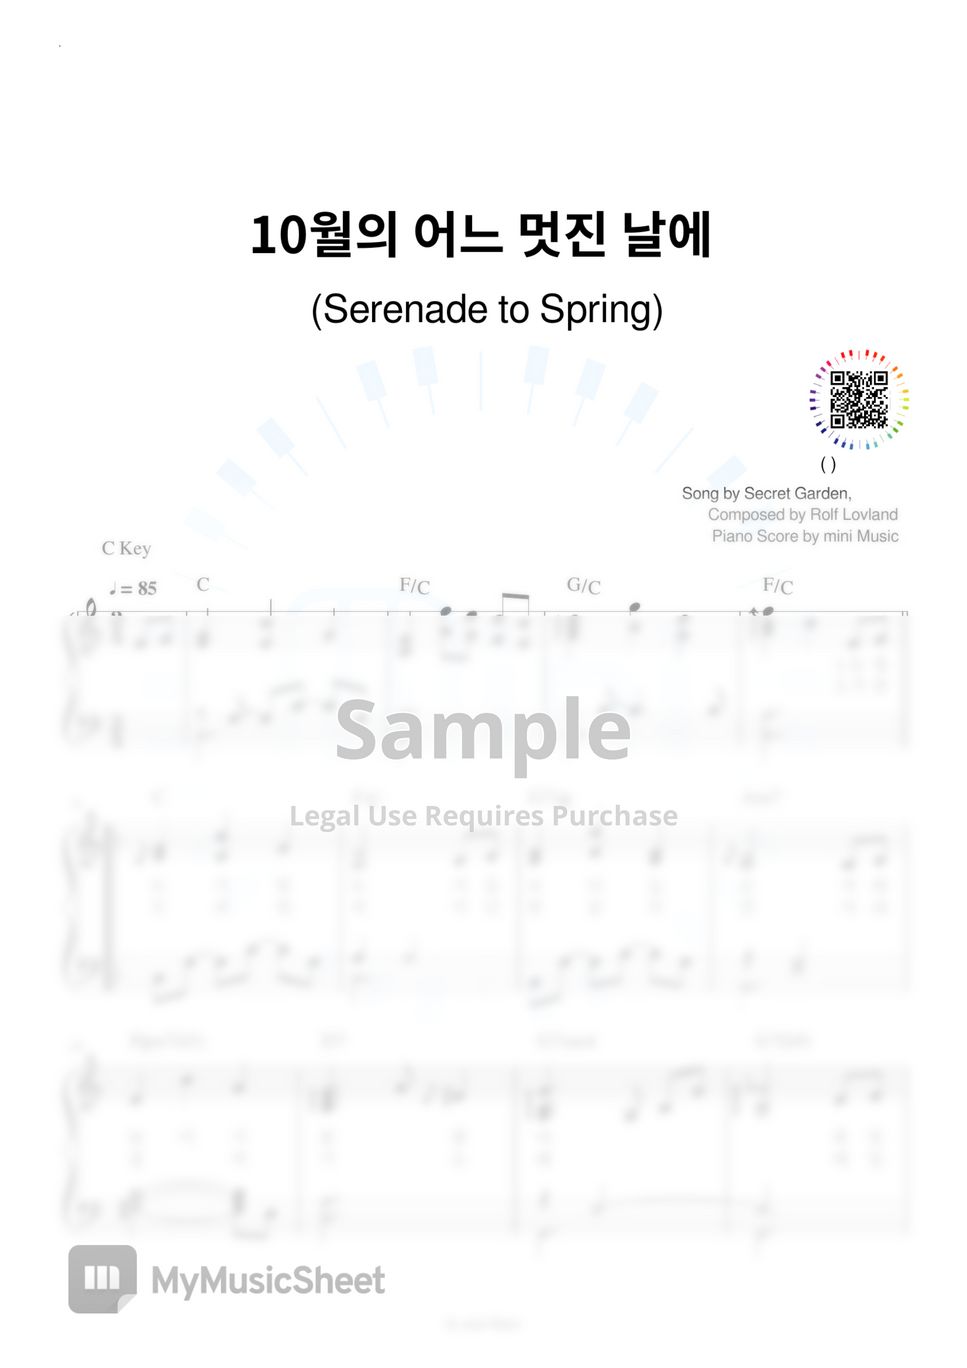 Rolf loveland (김동규) - Serenade To Spring (10월의 어느 멋진 날에) (C Key) by mini Music